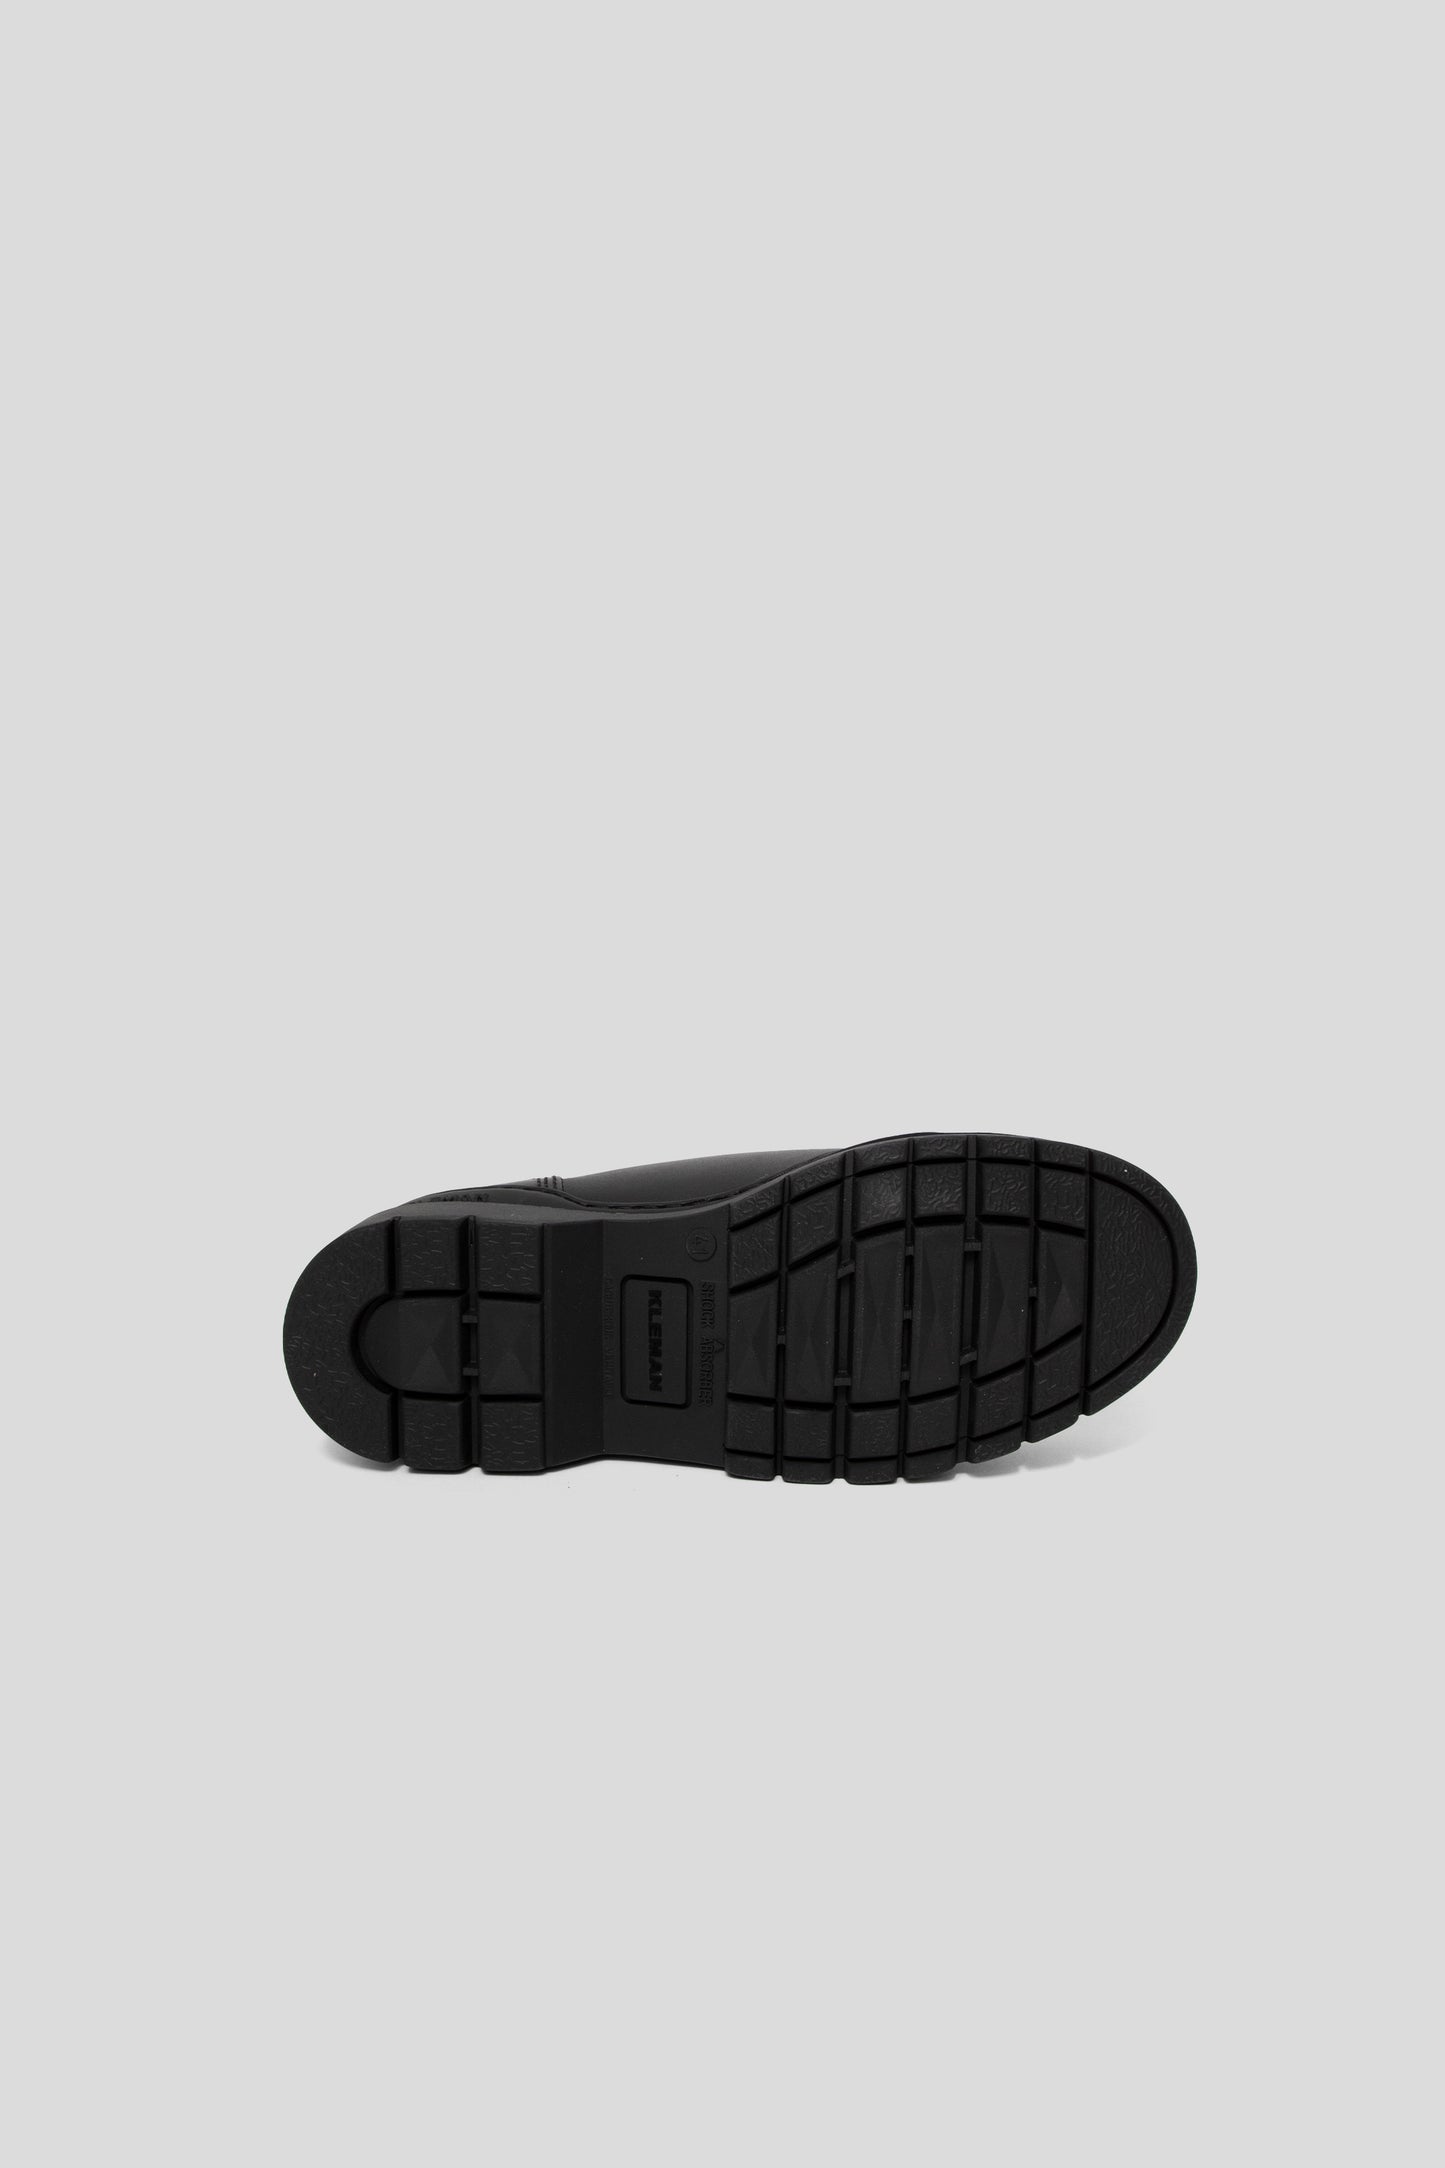 Kleman Women's Major Shoe in Black